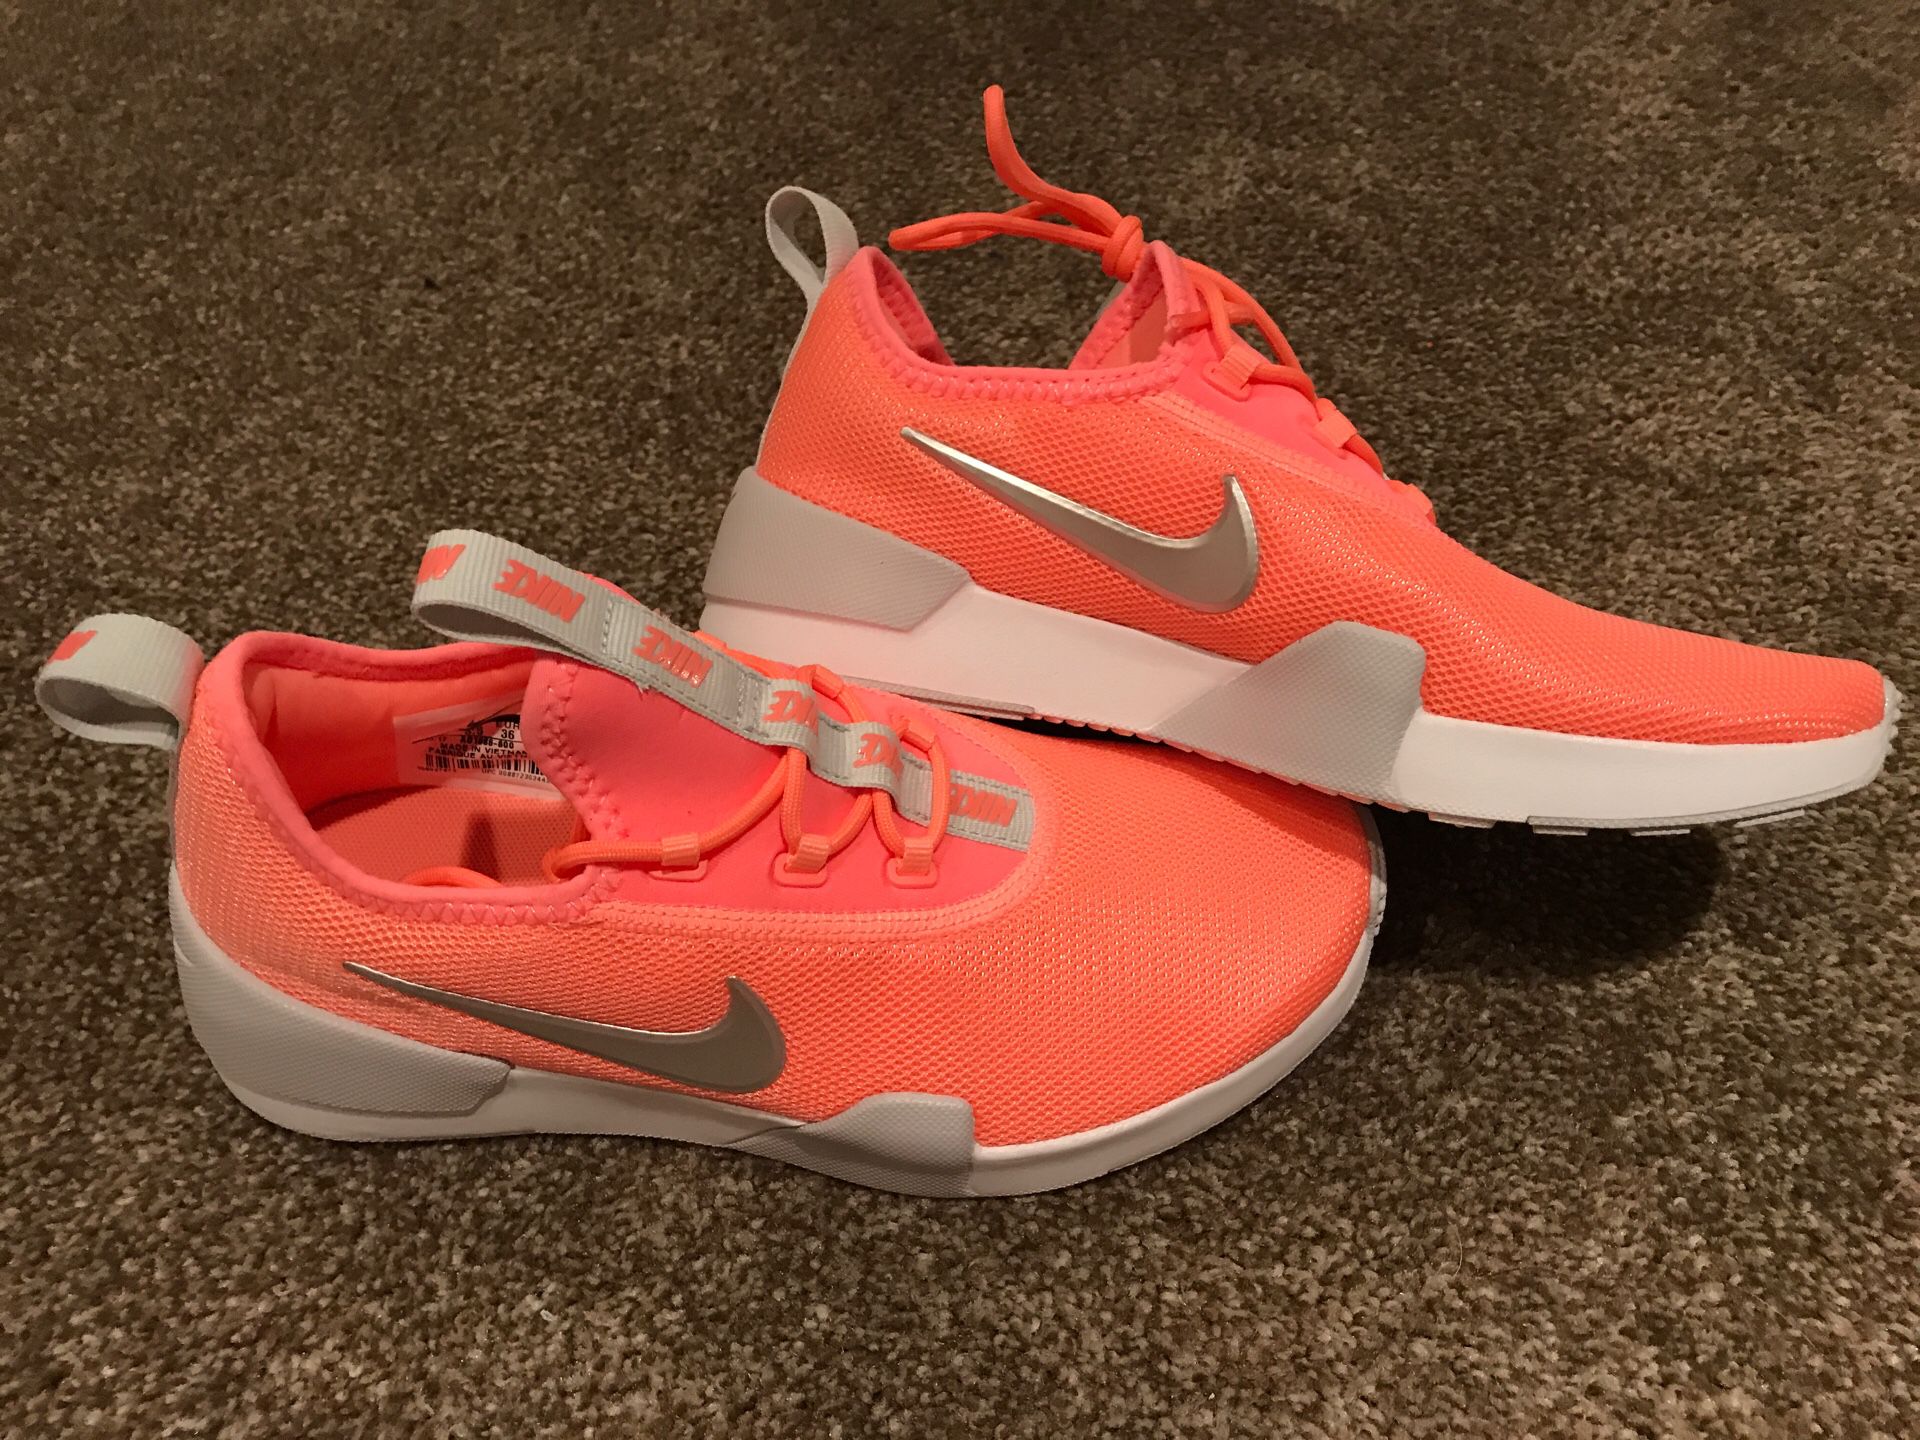 Peach Nike running shoes